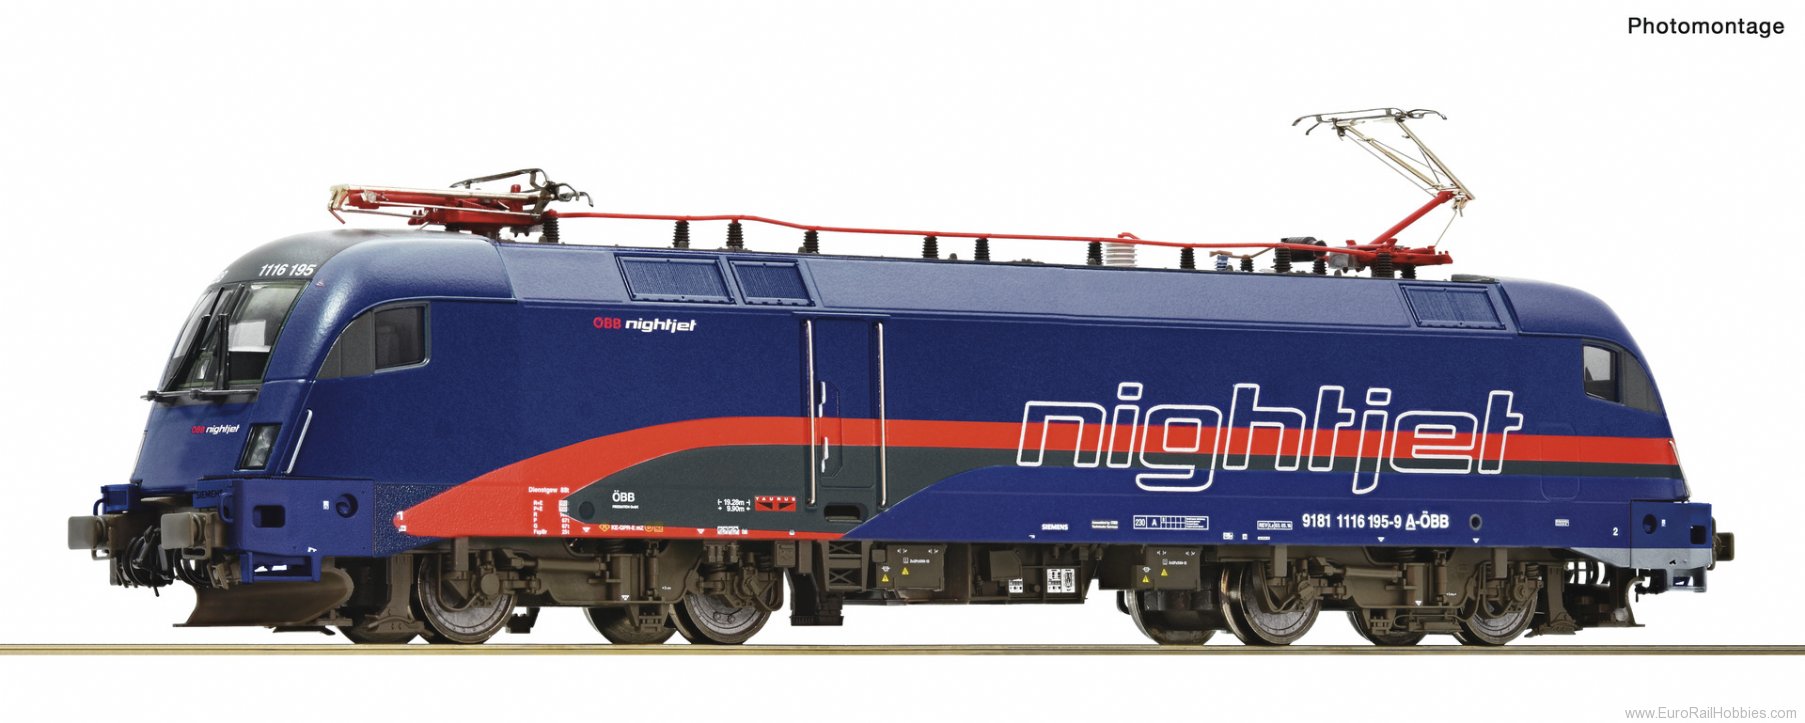 Roco 70495 Electric locomotive 1116 195-9 Nightjet, Ã